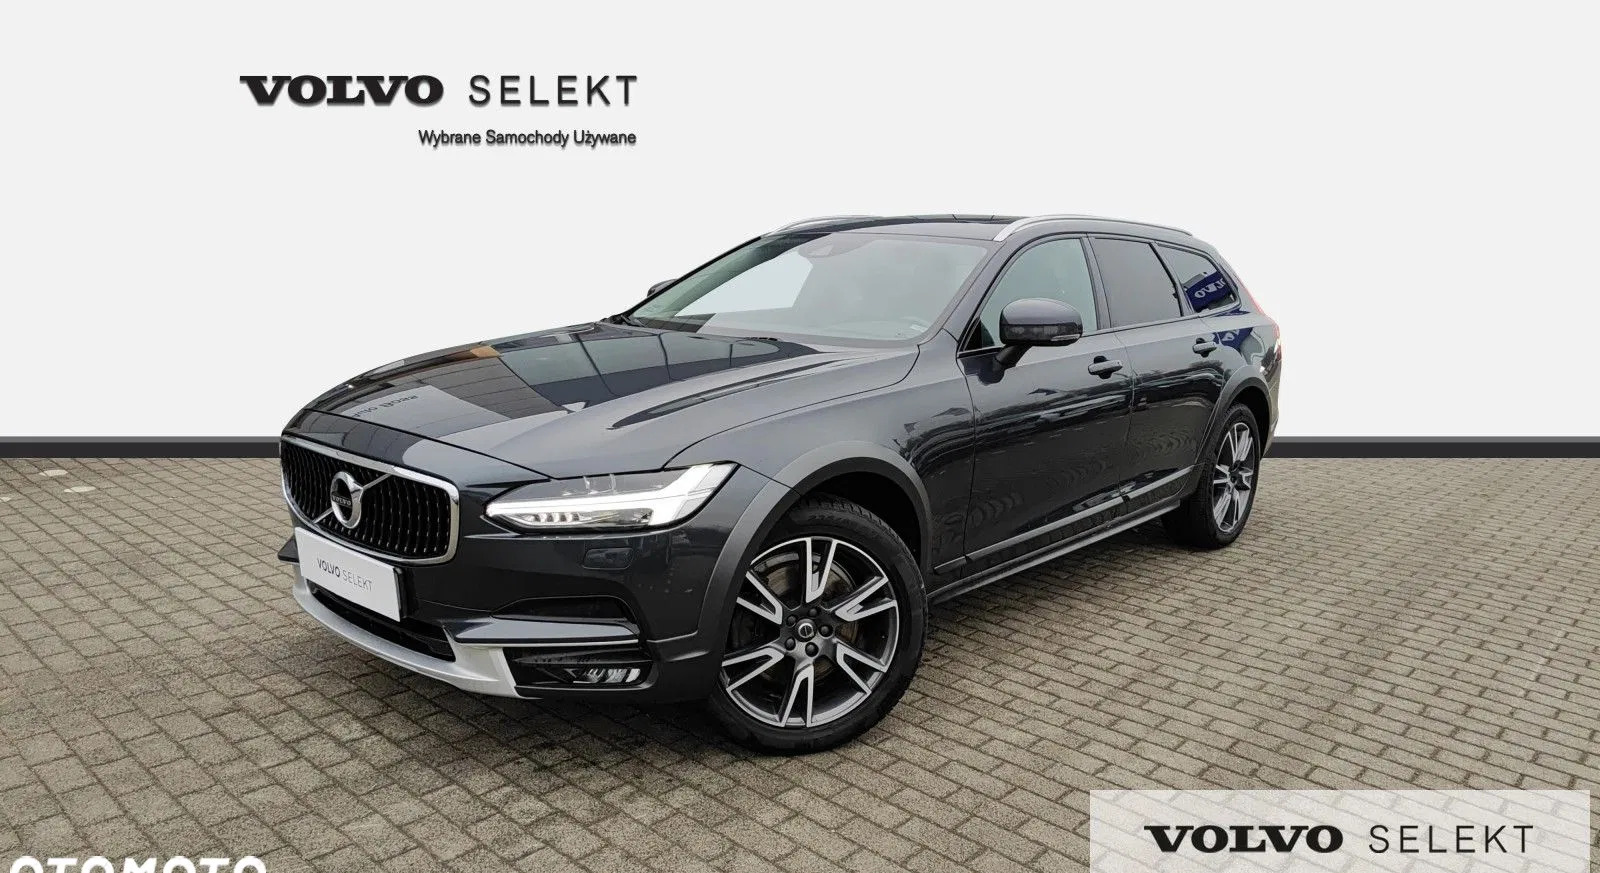 volvo Volvo V90 Cross Country cena 139900 przebieg: 149325, rok produkcji 2017 z Puławy